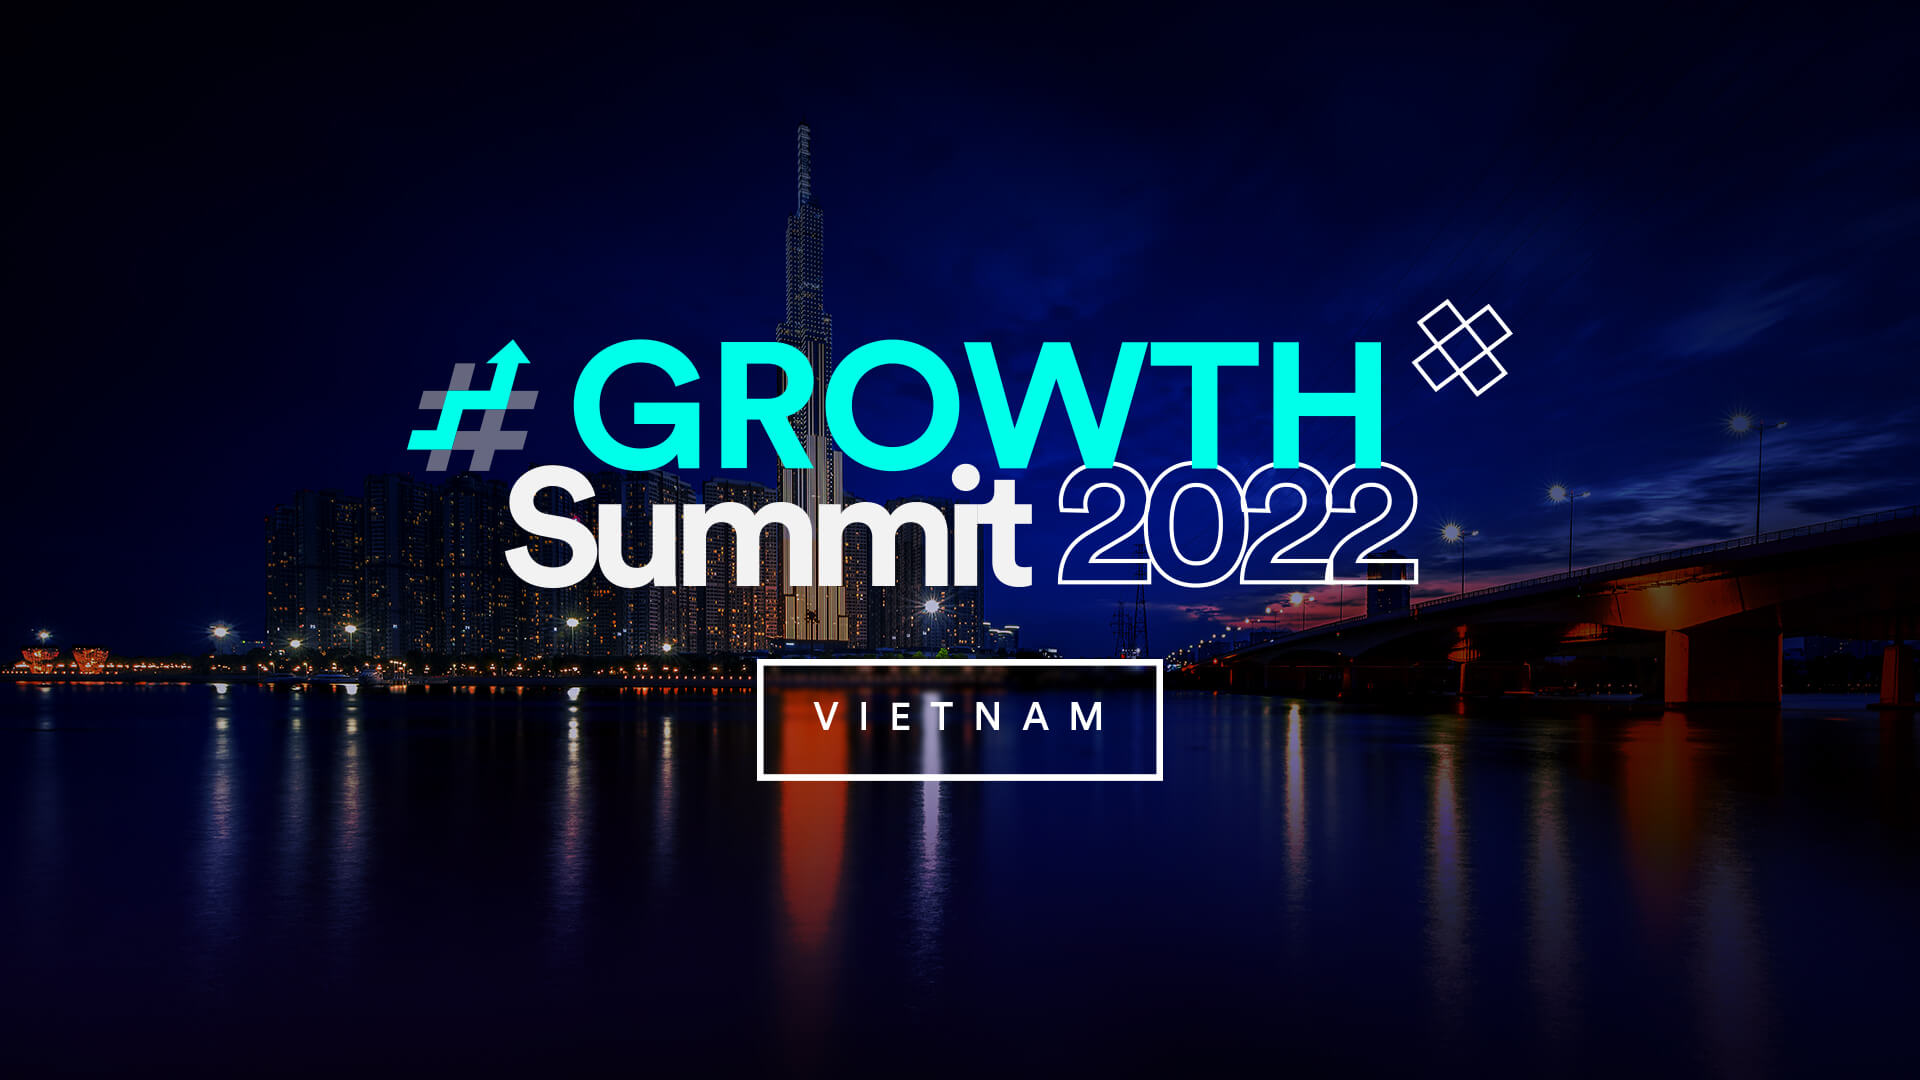 HashGrowth Summit Vietnam 2022